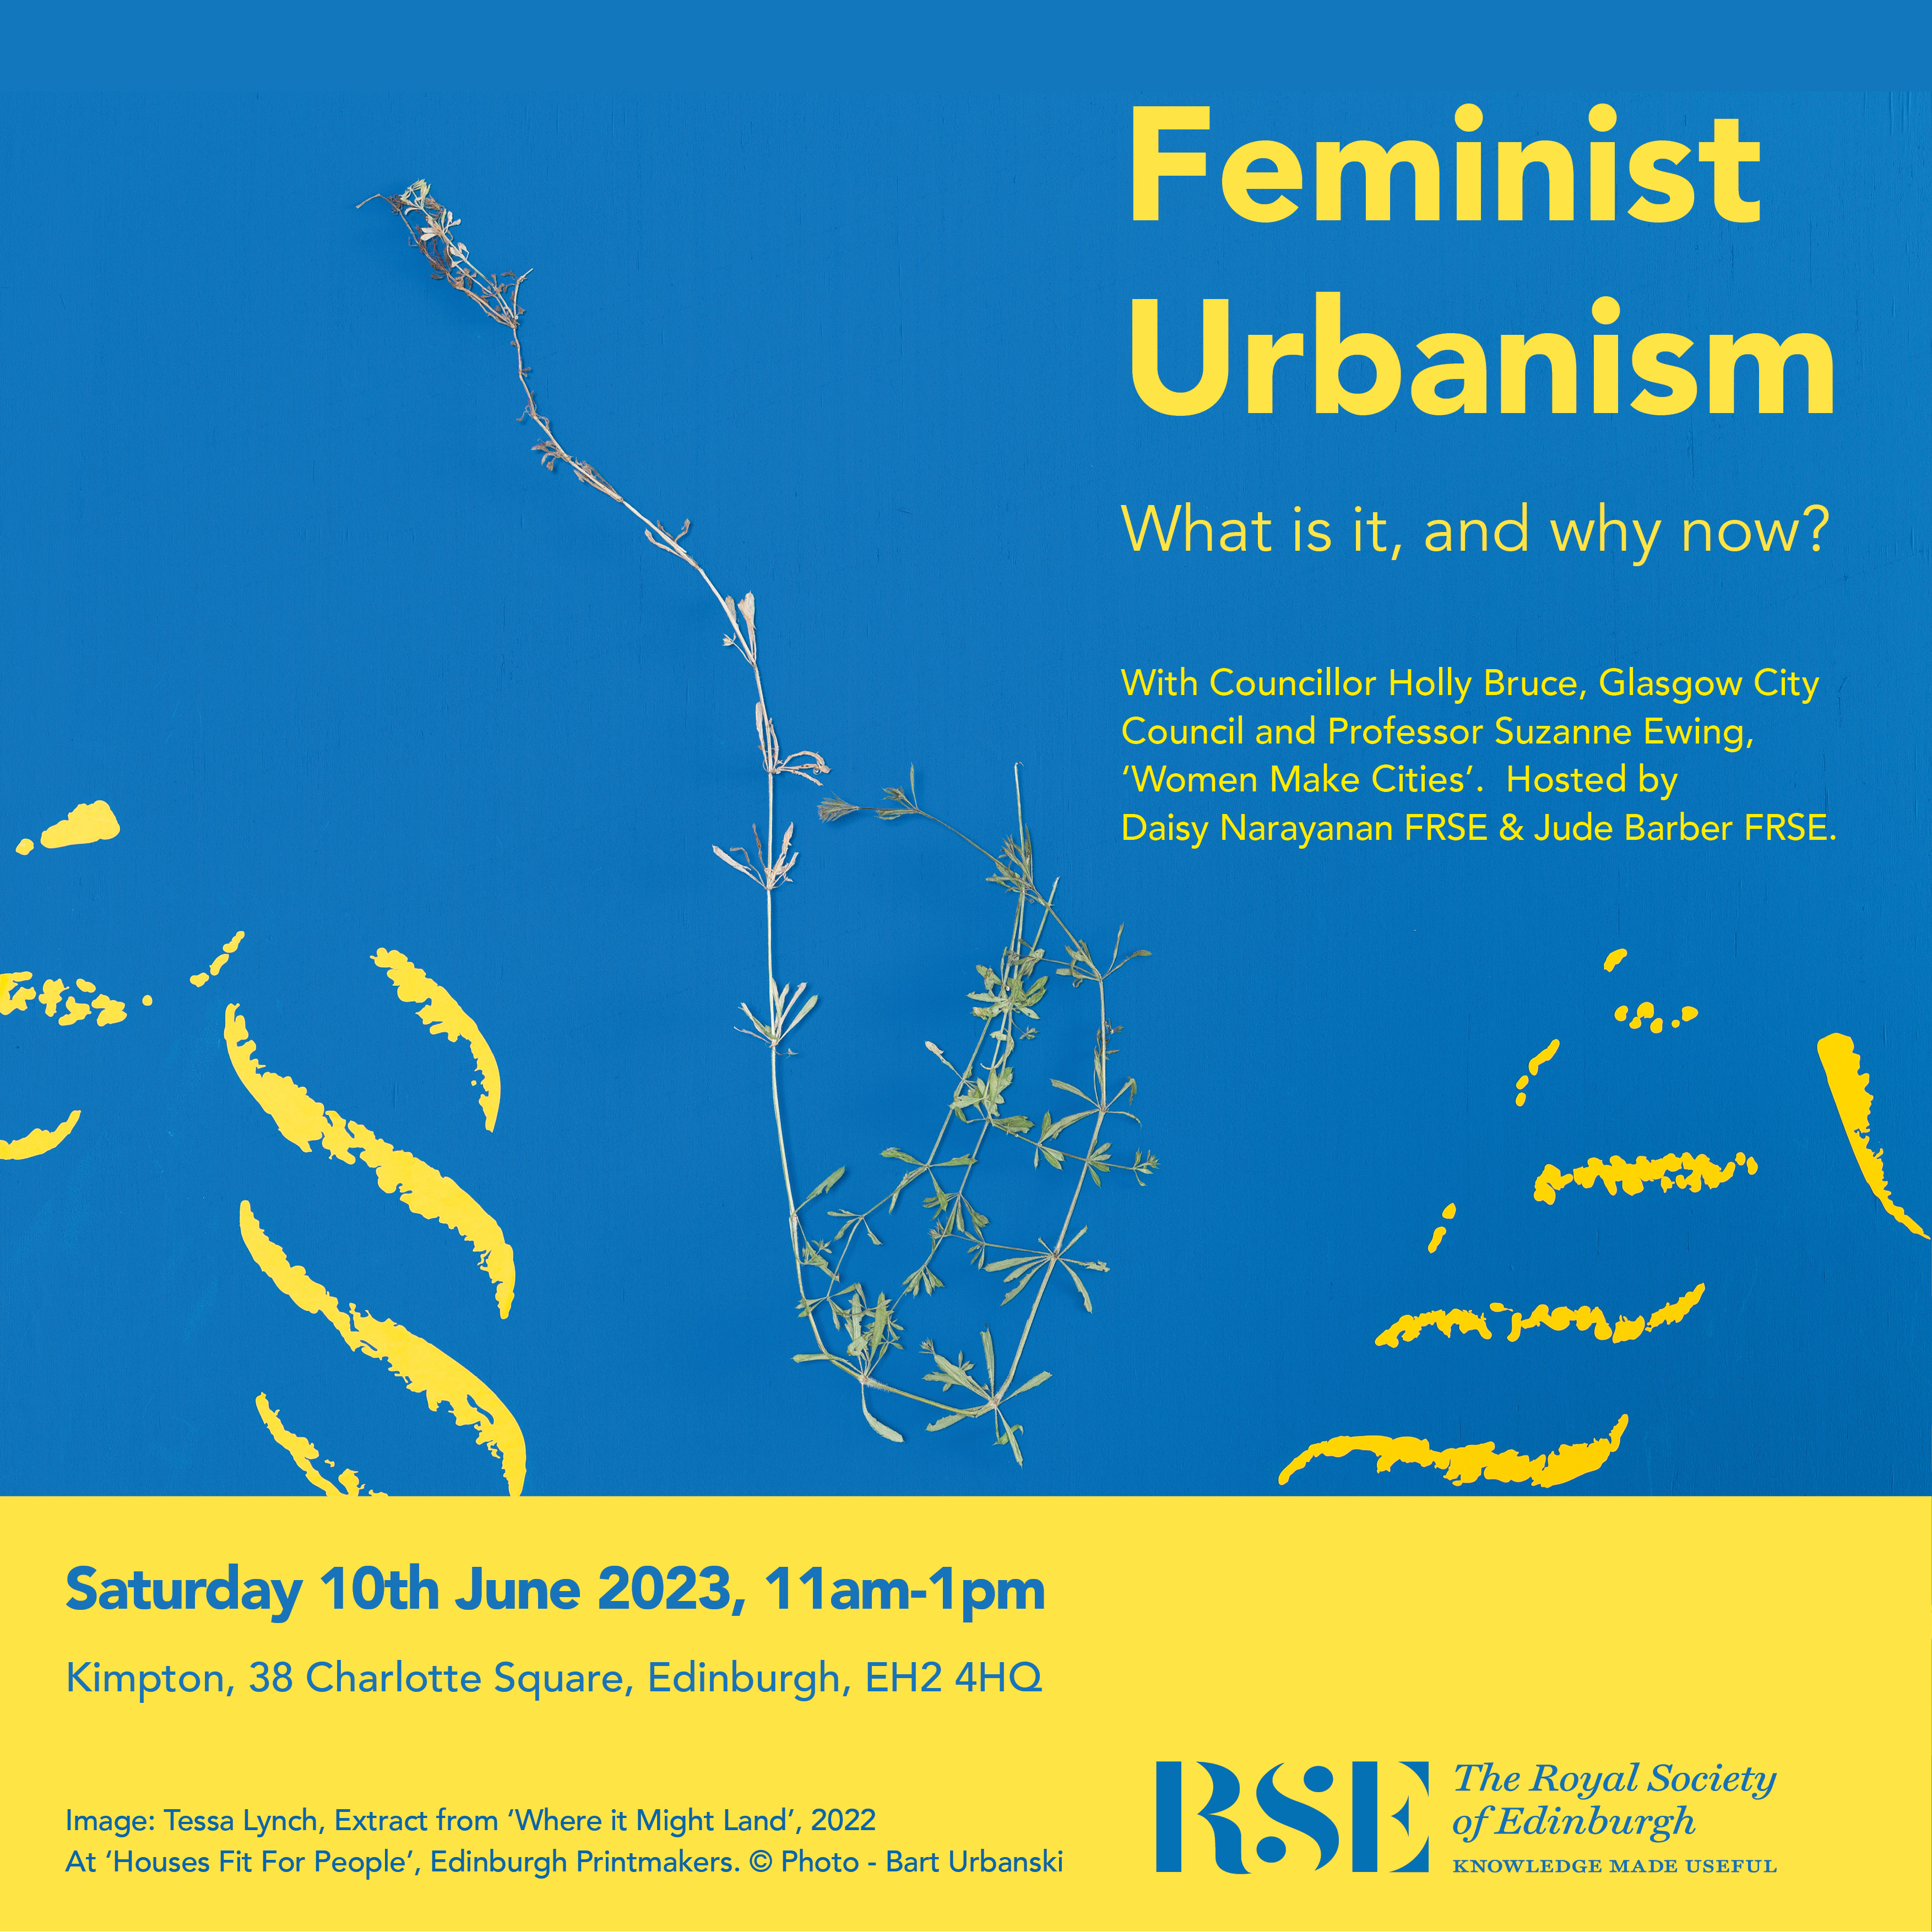 graphic image advertising event on 10 June 2023, Feminist Urbaisms